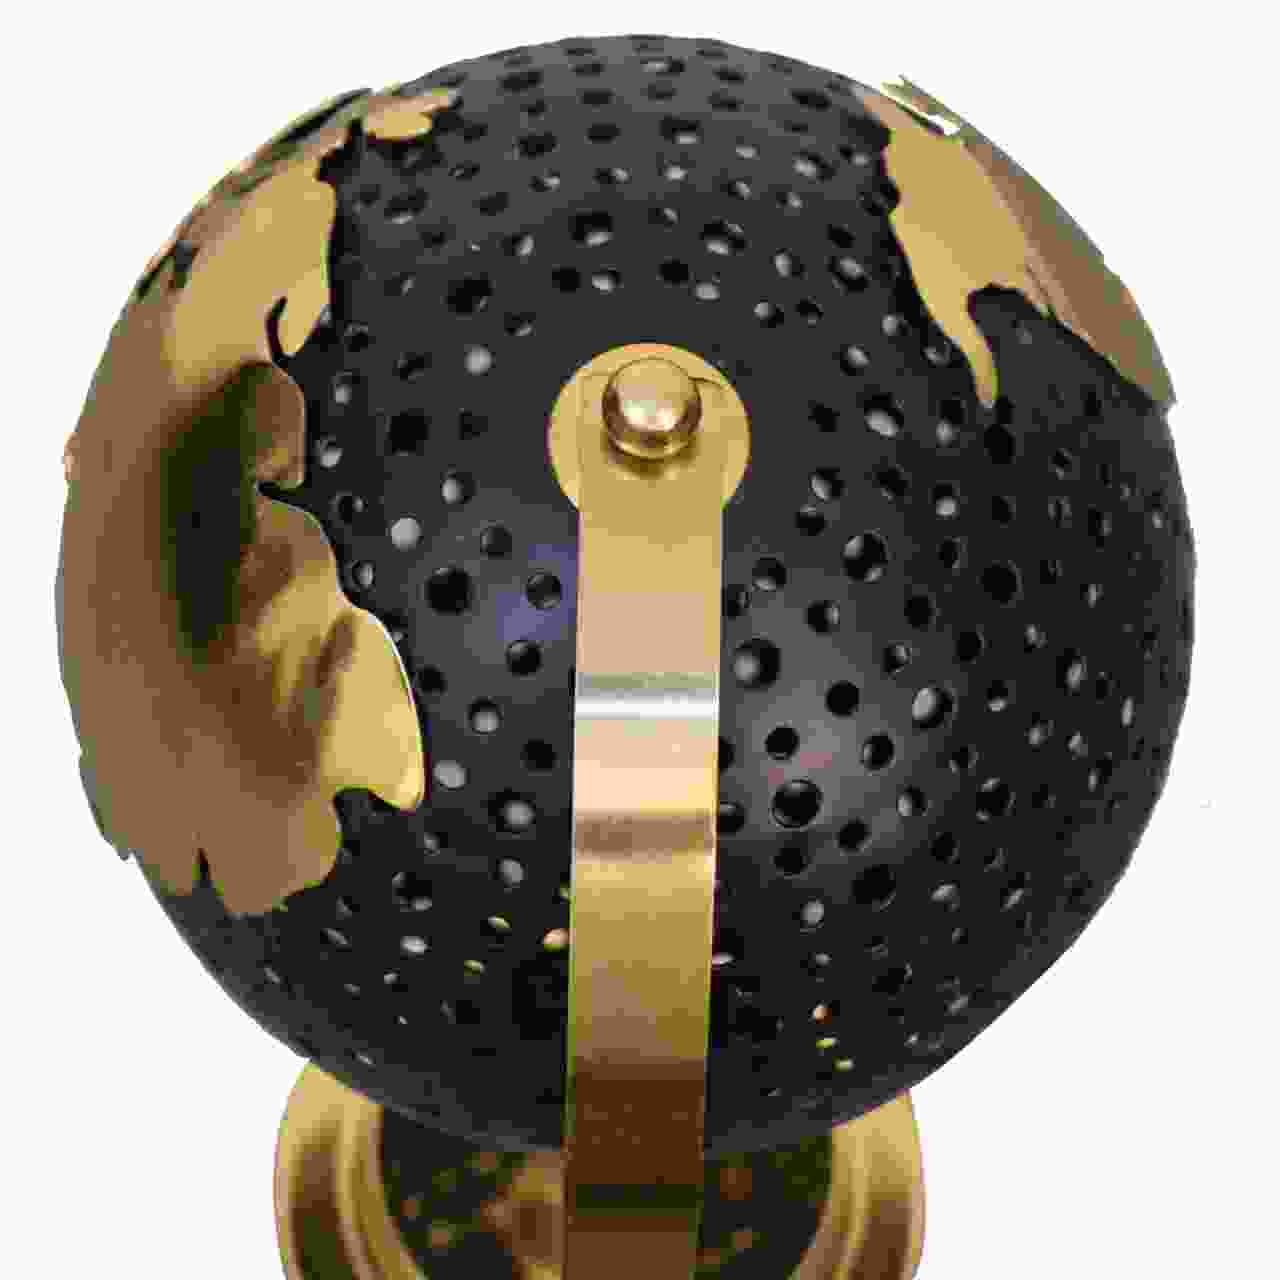 Artisan Black Globe with Gold Frame